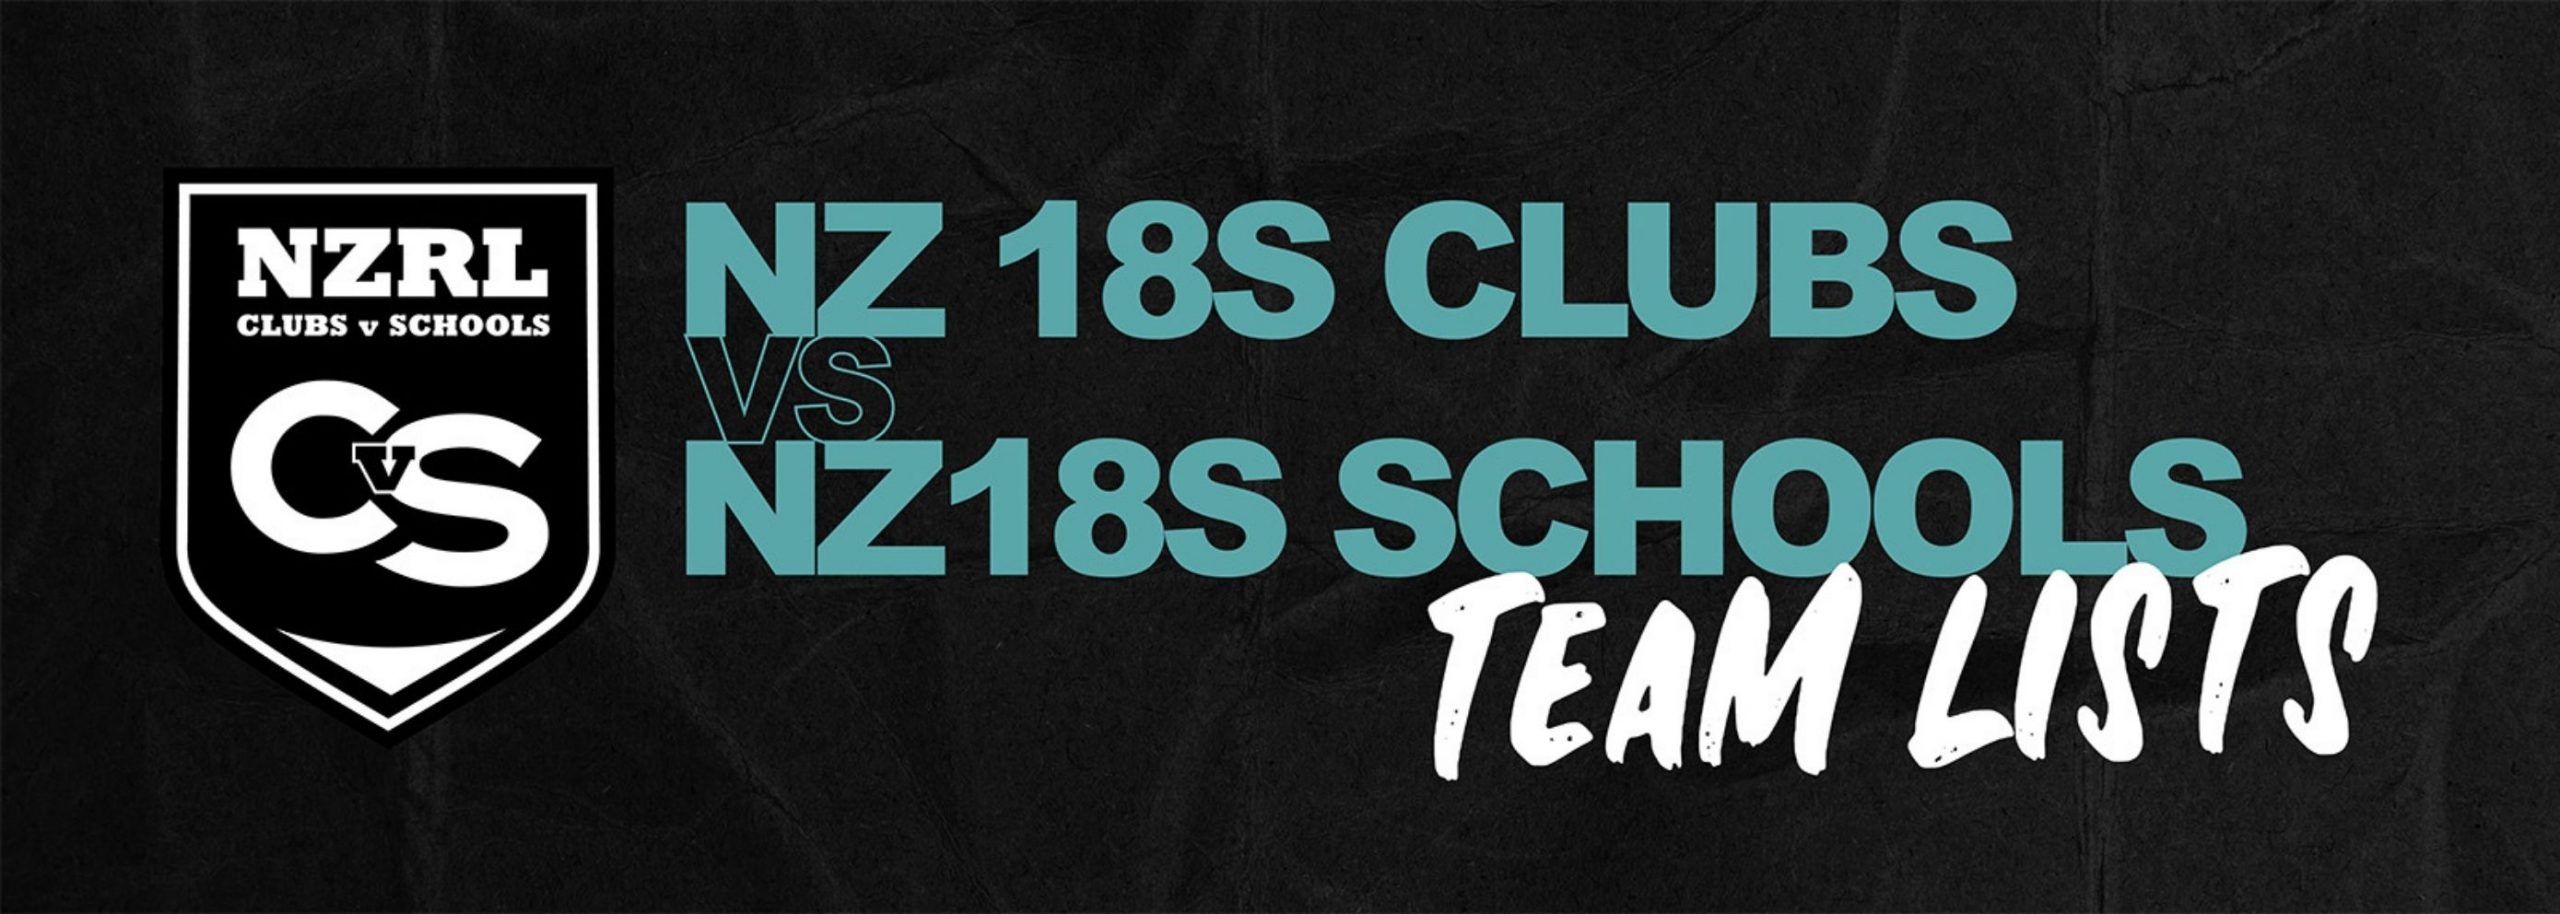 NZRL Schools v Clubs teams announced (18s)